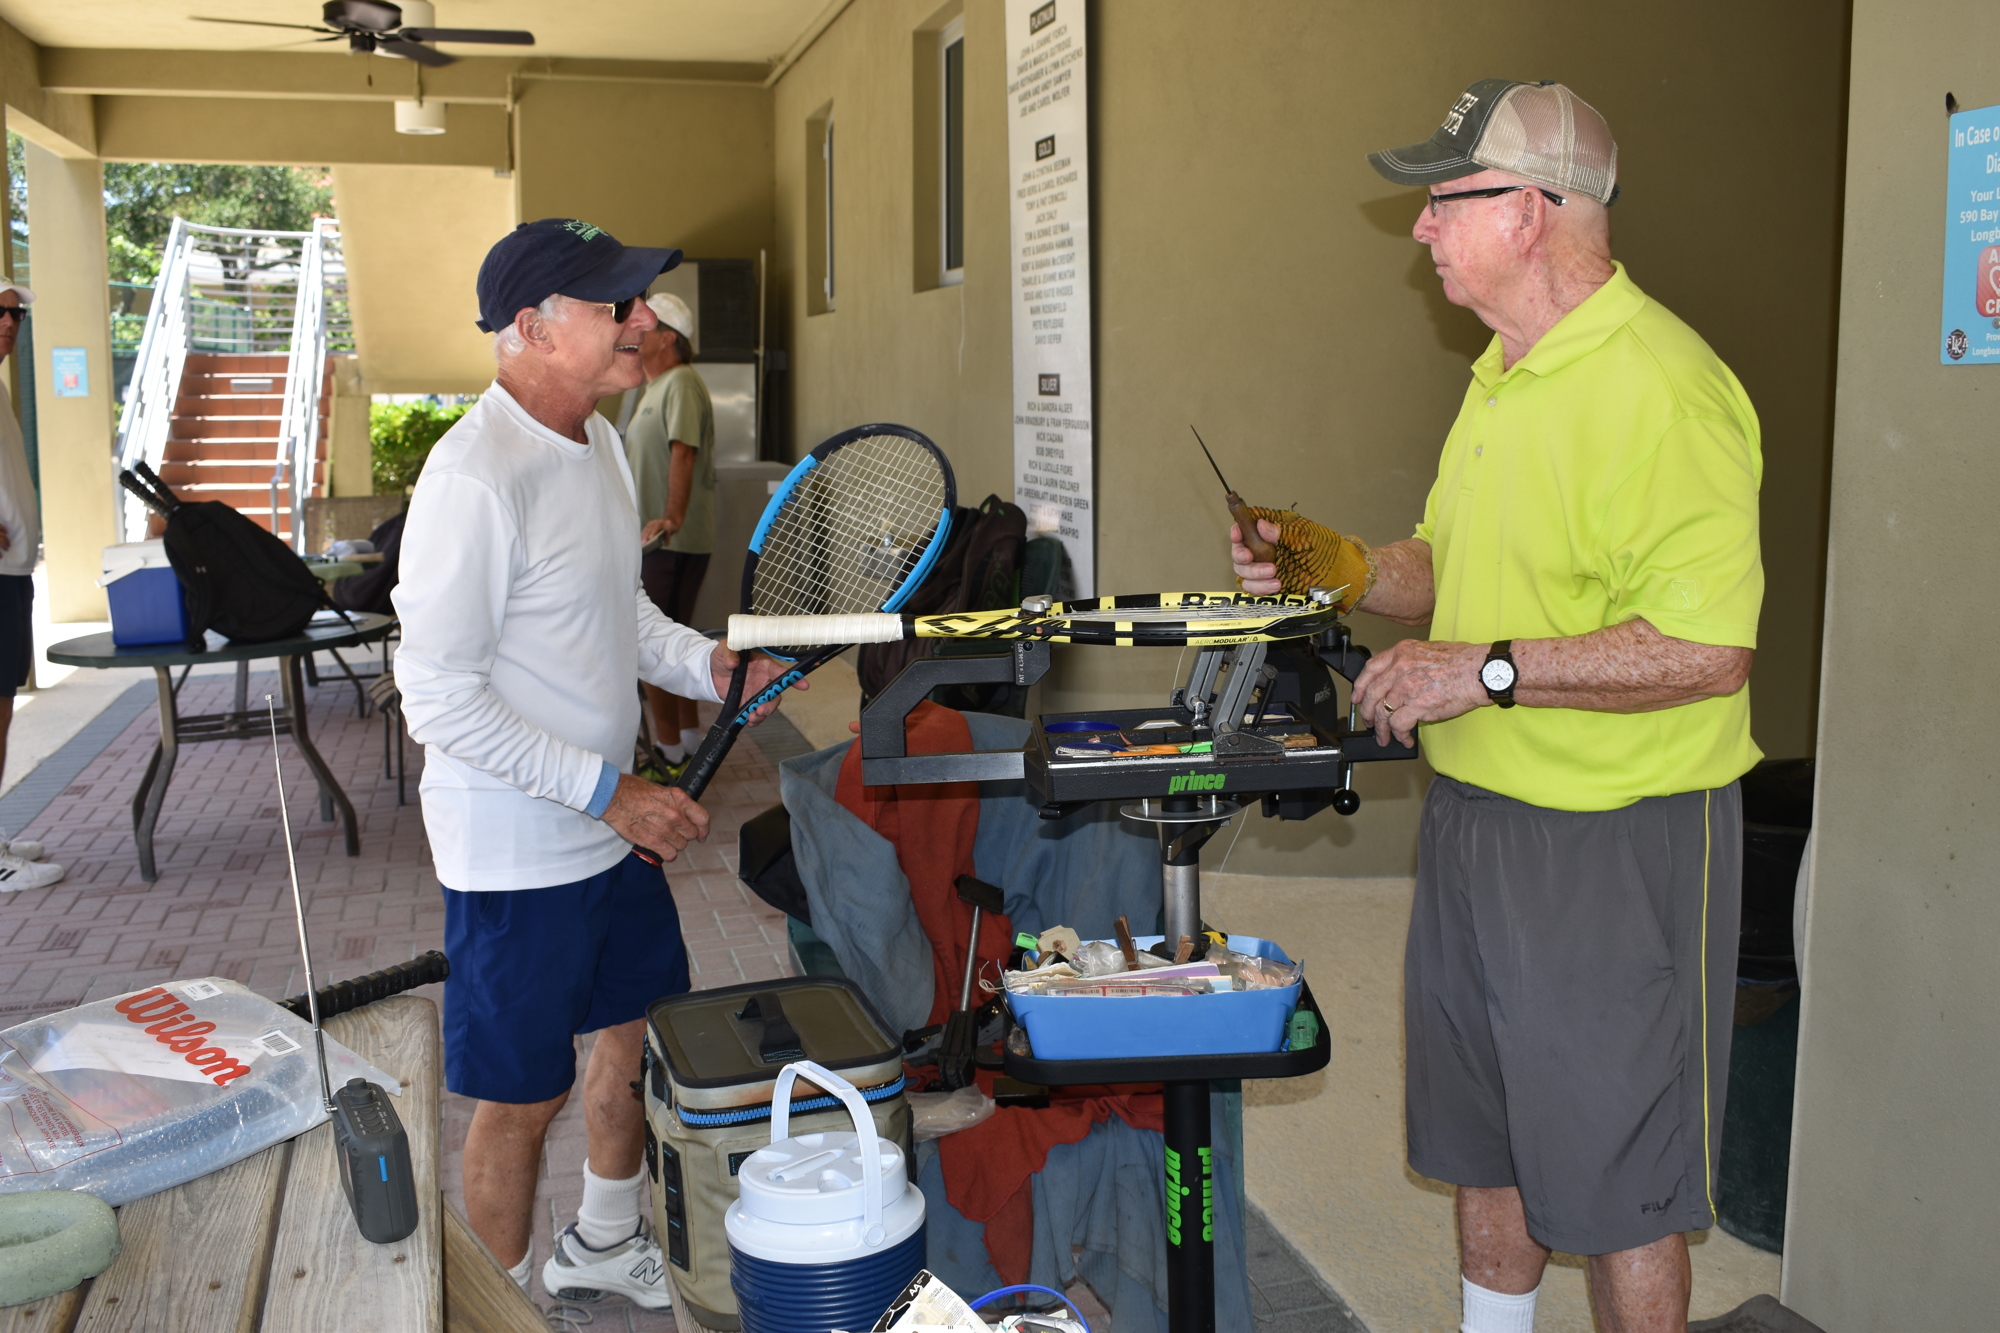 Mark Rosenfeld (left) says hello to Jay Morgan (right) on Monday, Aug. 2 at the Longboat Key Tennis Center.